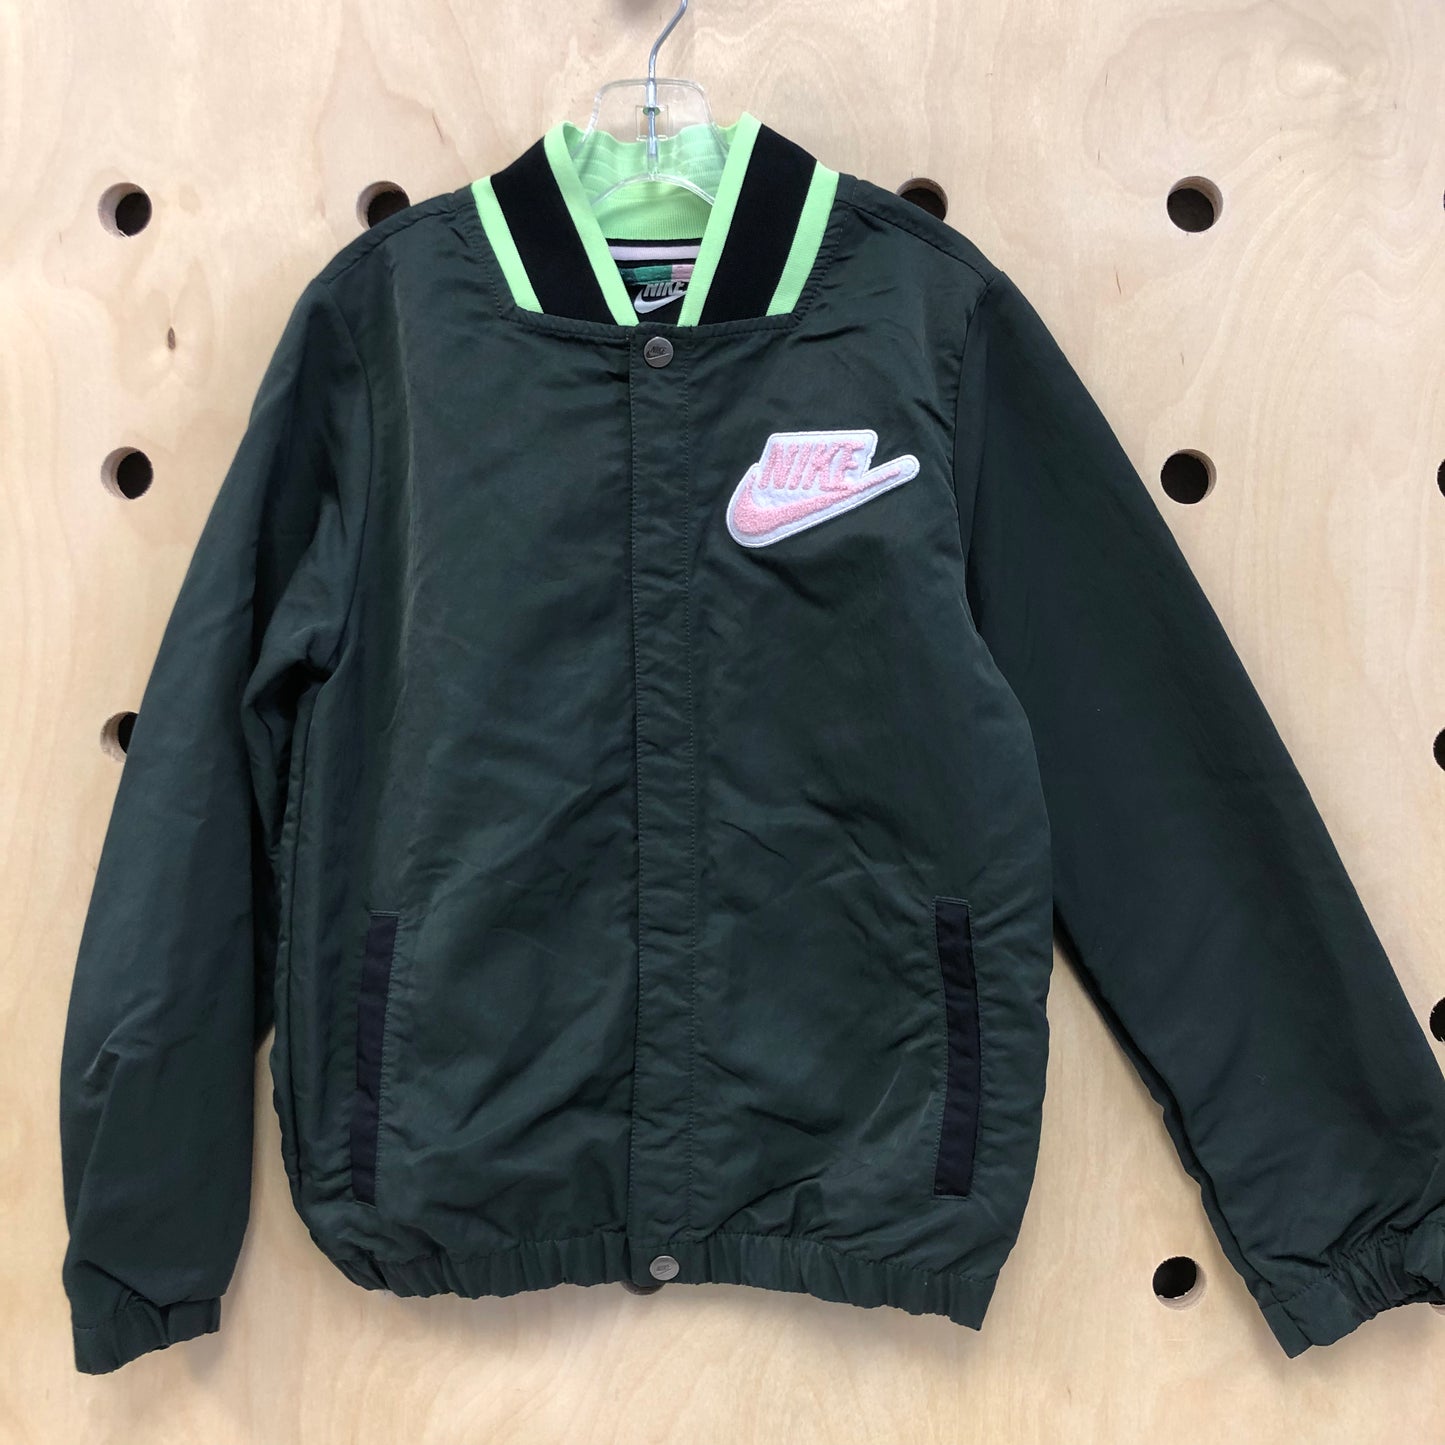 Green + Pink Jacket